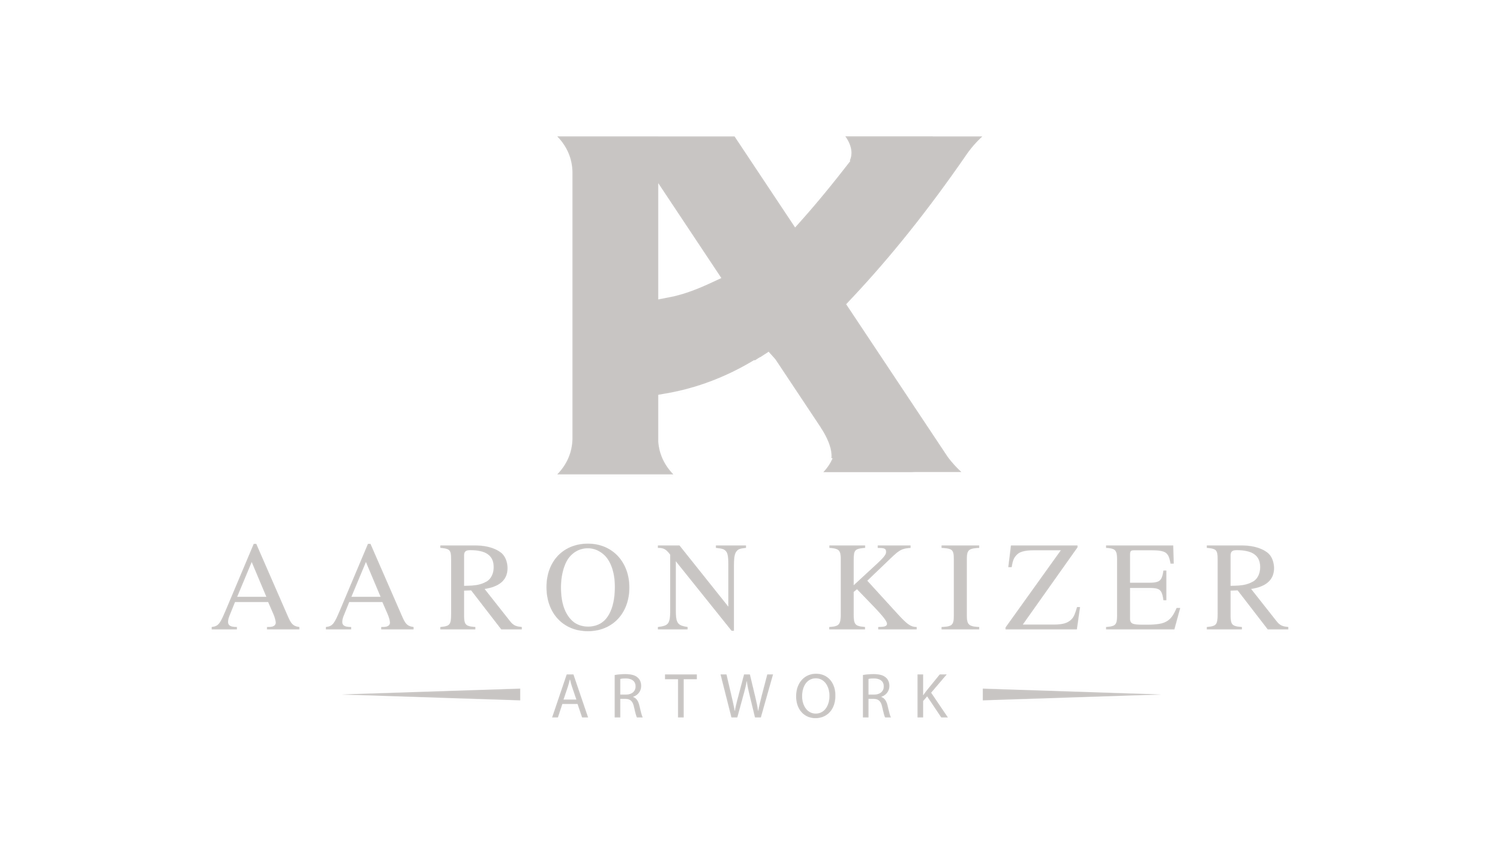 Kizer Arts